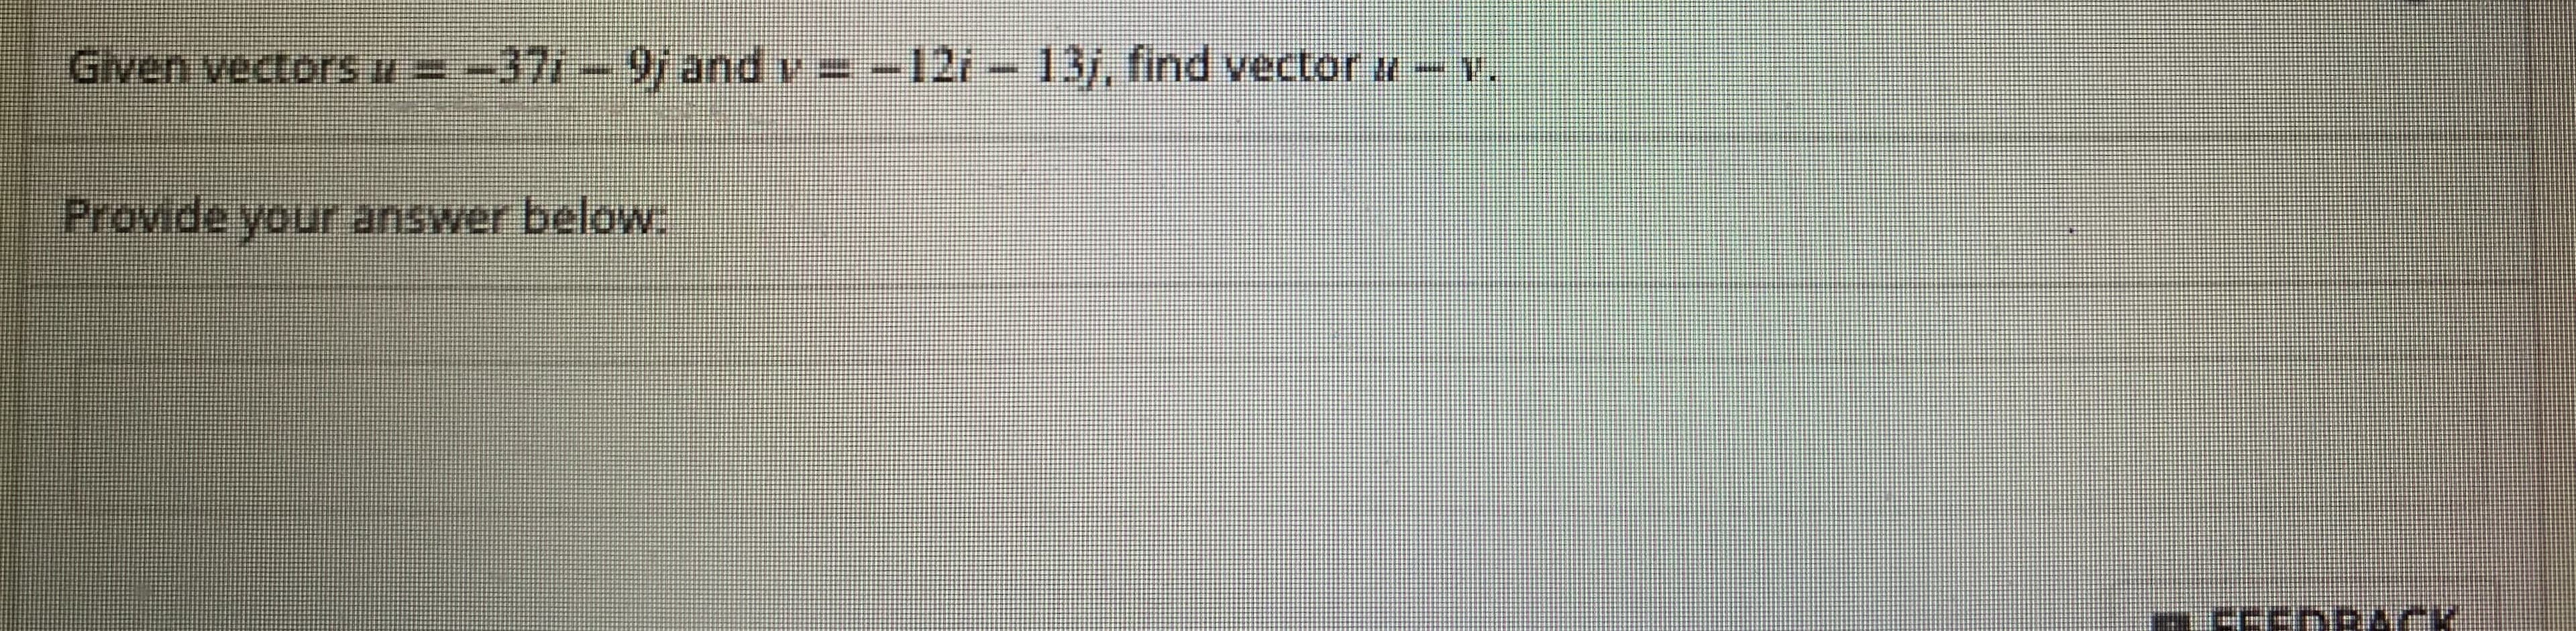 Given vectors a=-37-9)andy=-12t-13, find vector x
